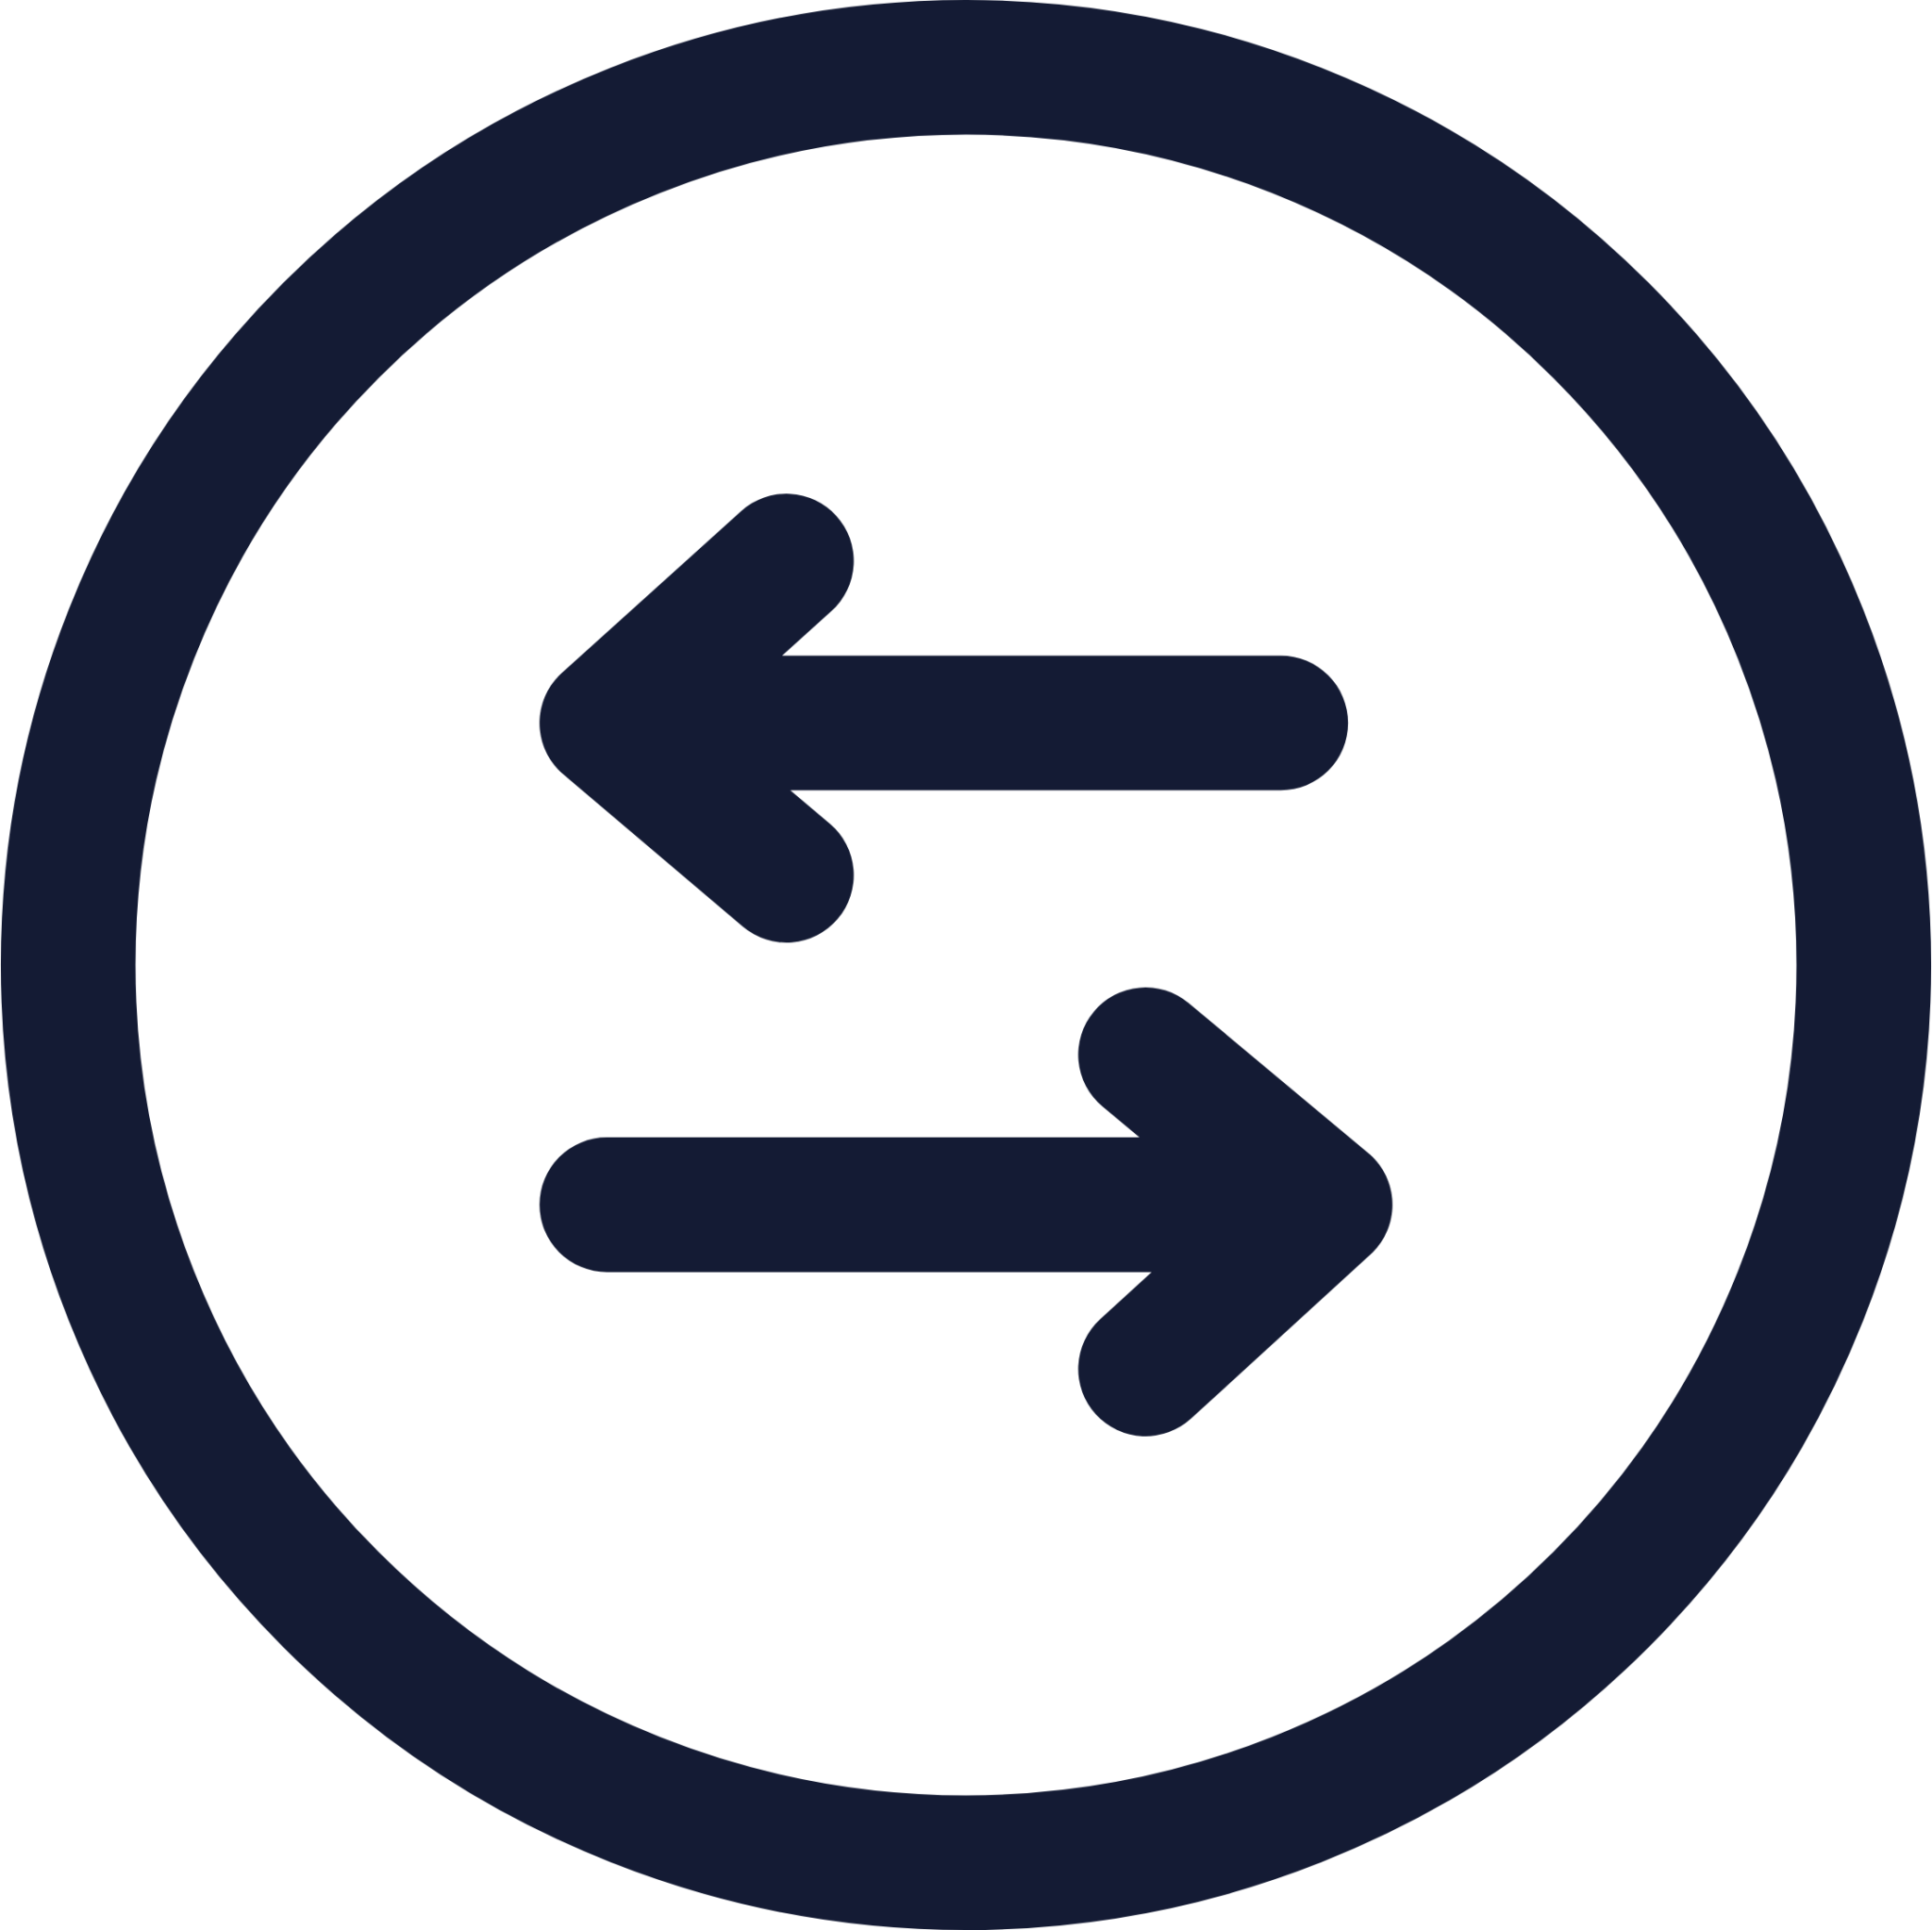 circle arrow left right icon